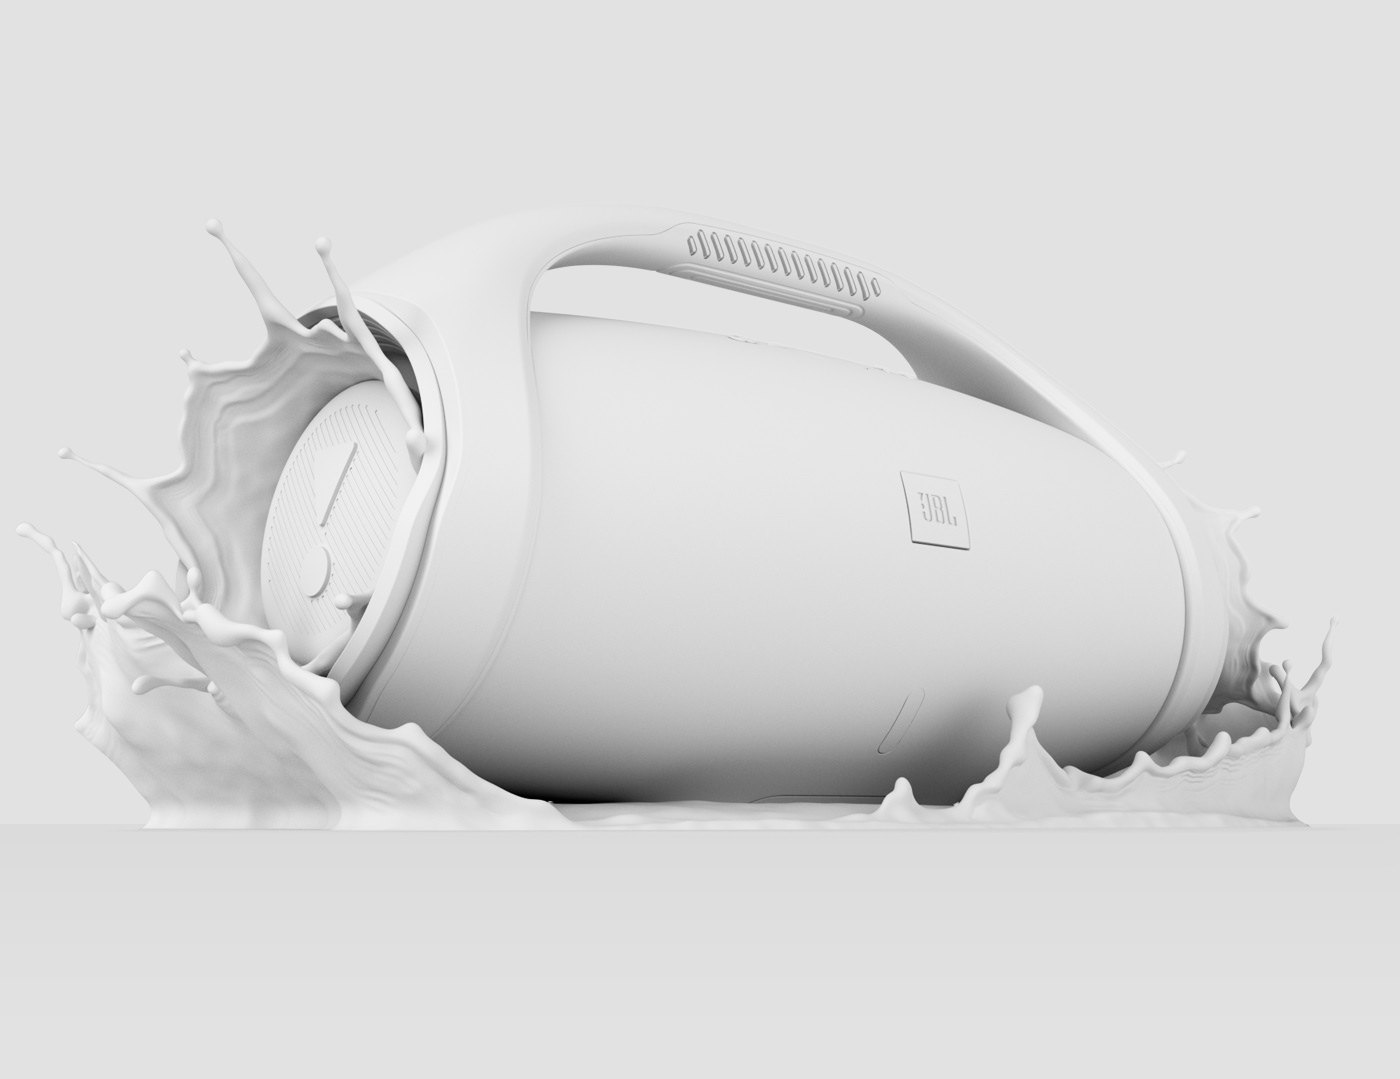 3D Harman kardon jbl akg industrial design CGI china Samsung